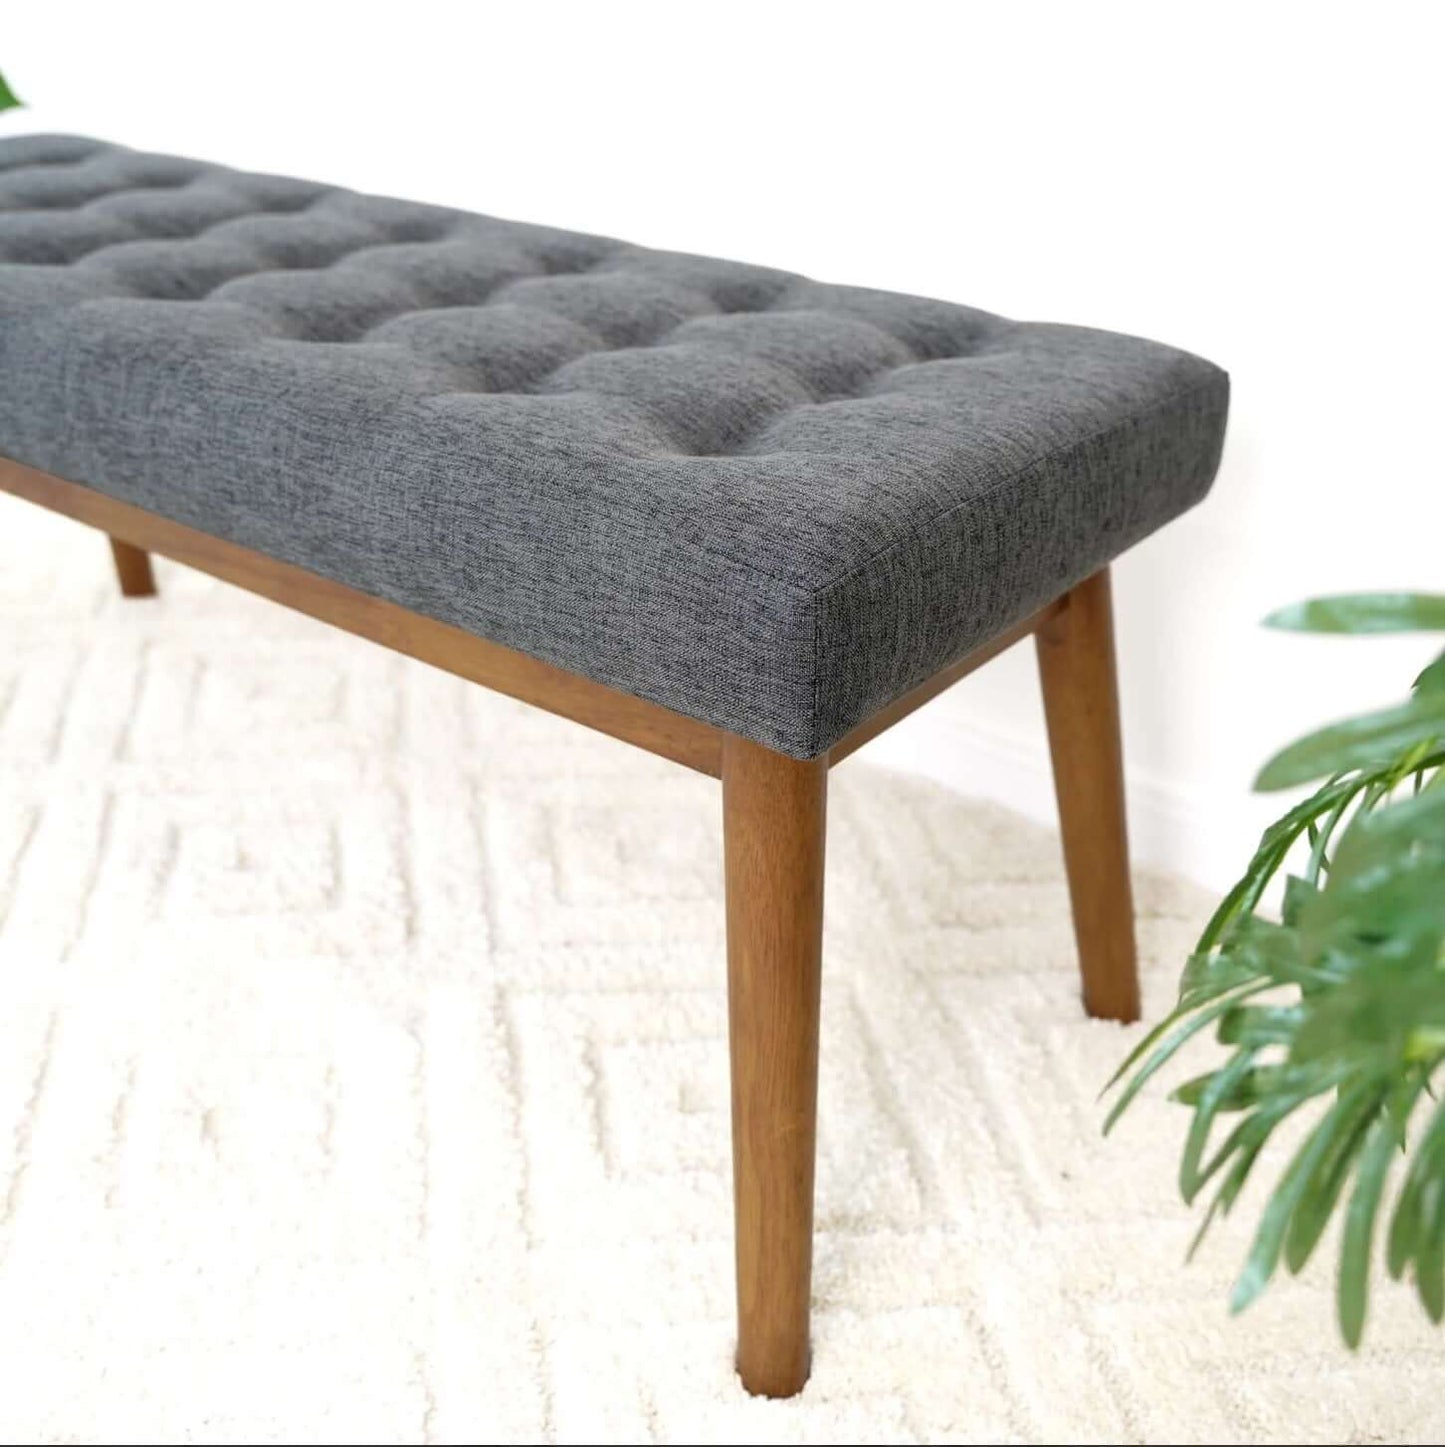 Delilah MCM Tufted Upholstered Fabric Bench - Revel Sofa 